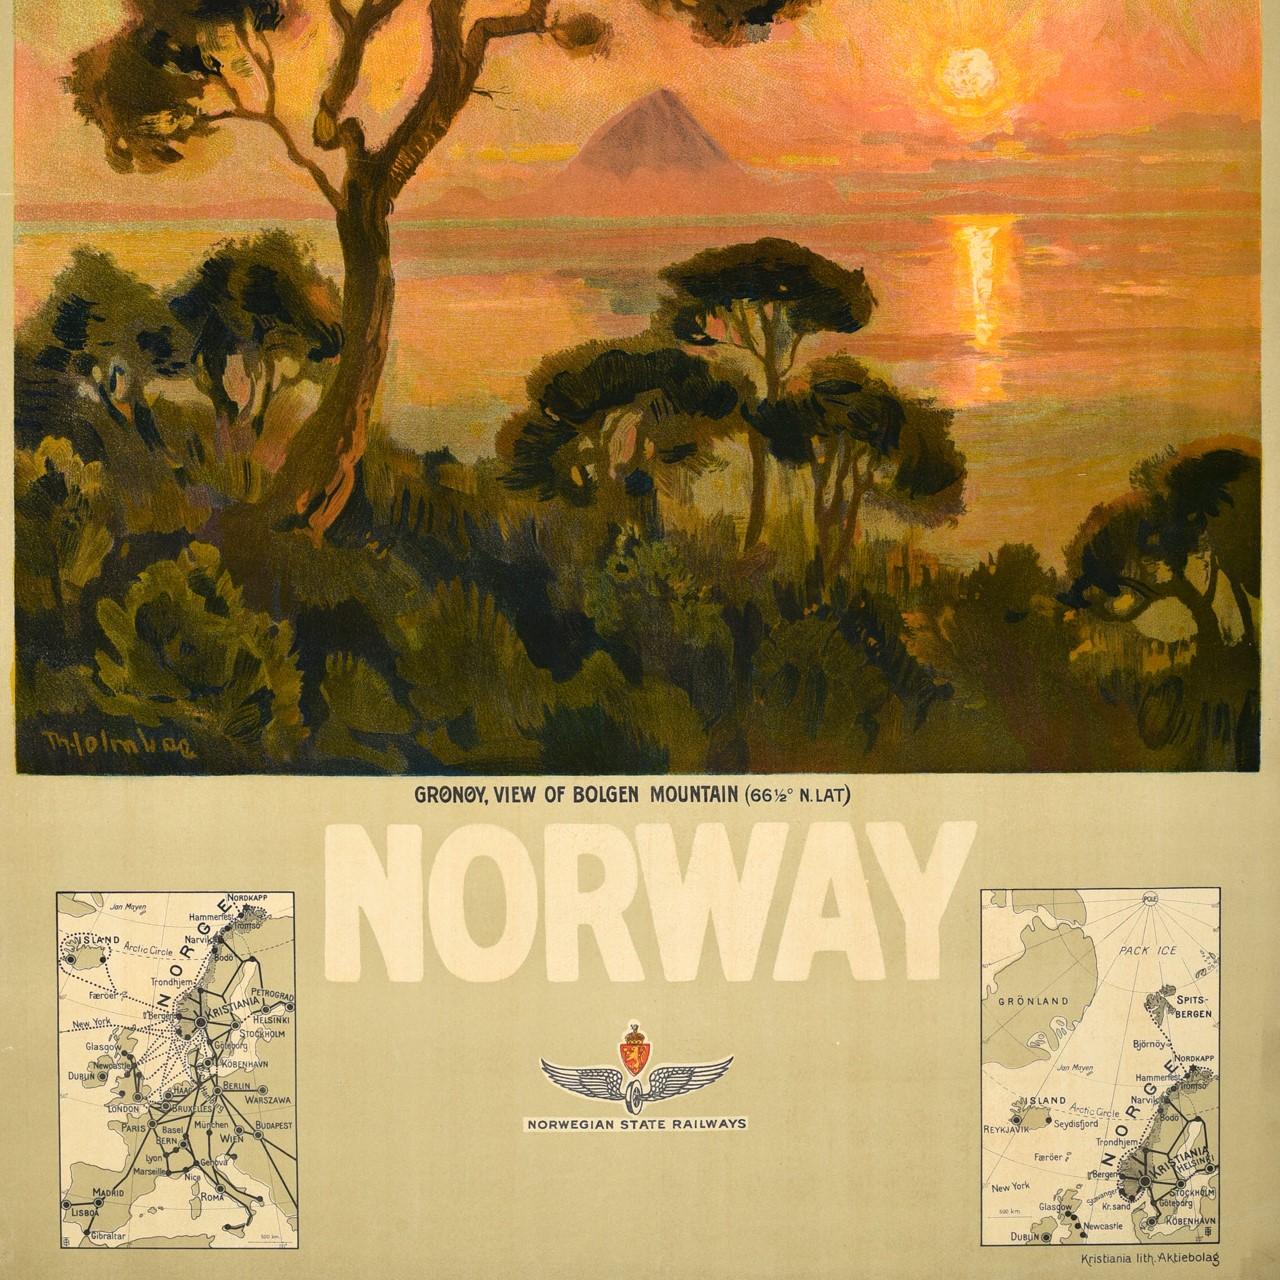 Norwegian Original Antique Poster Midnight Sun Norway Travel Gronoy Bolgen Mountain View For Sale